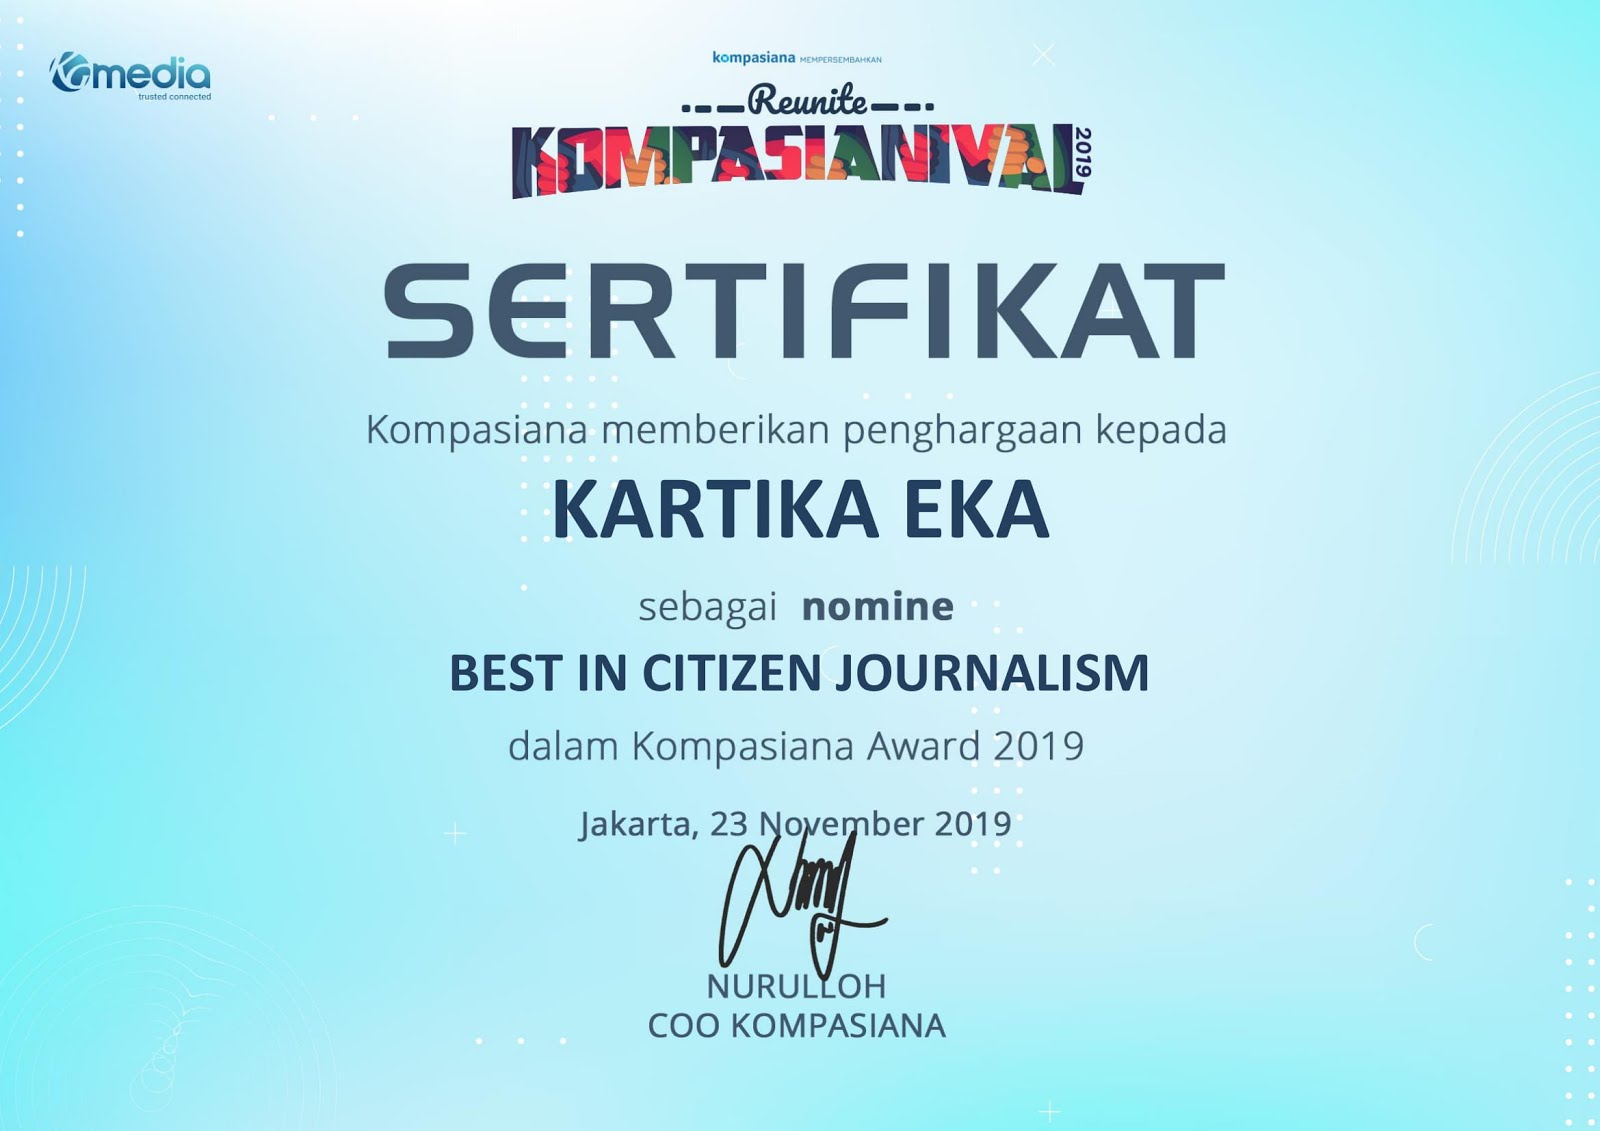 the best of citizen journalism nominee